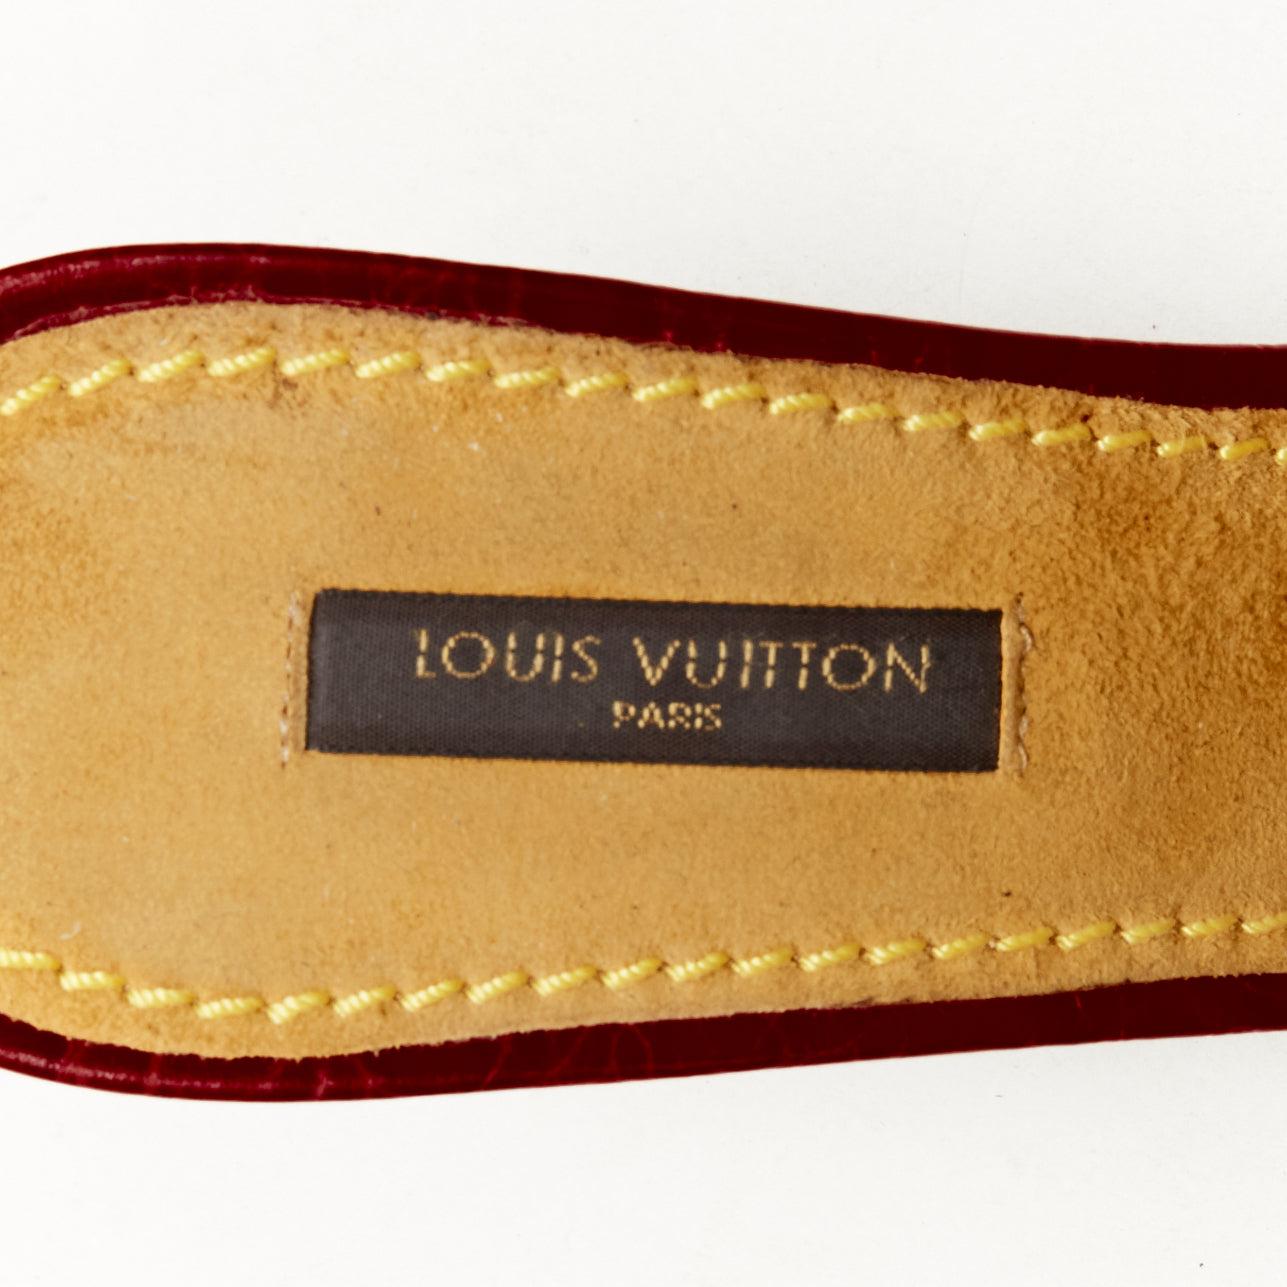 LOUIS VUITTON Y2K blue denim buckle leather high heel mule sandal EU37 4